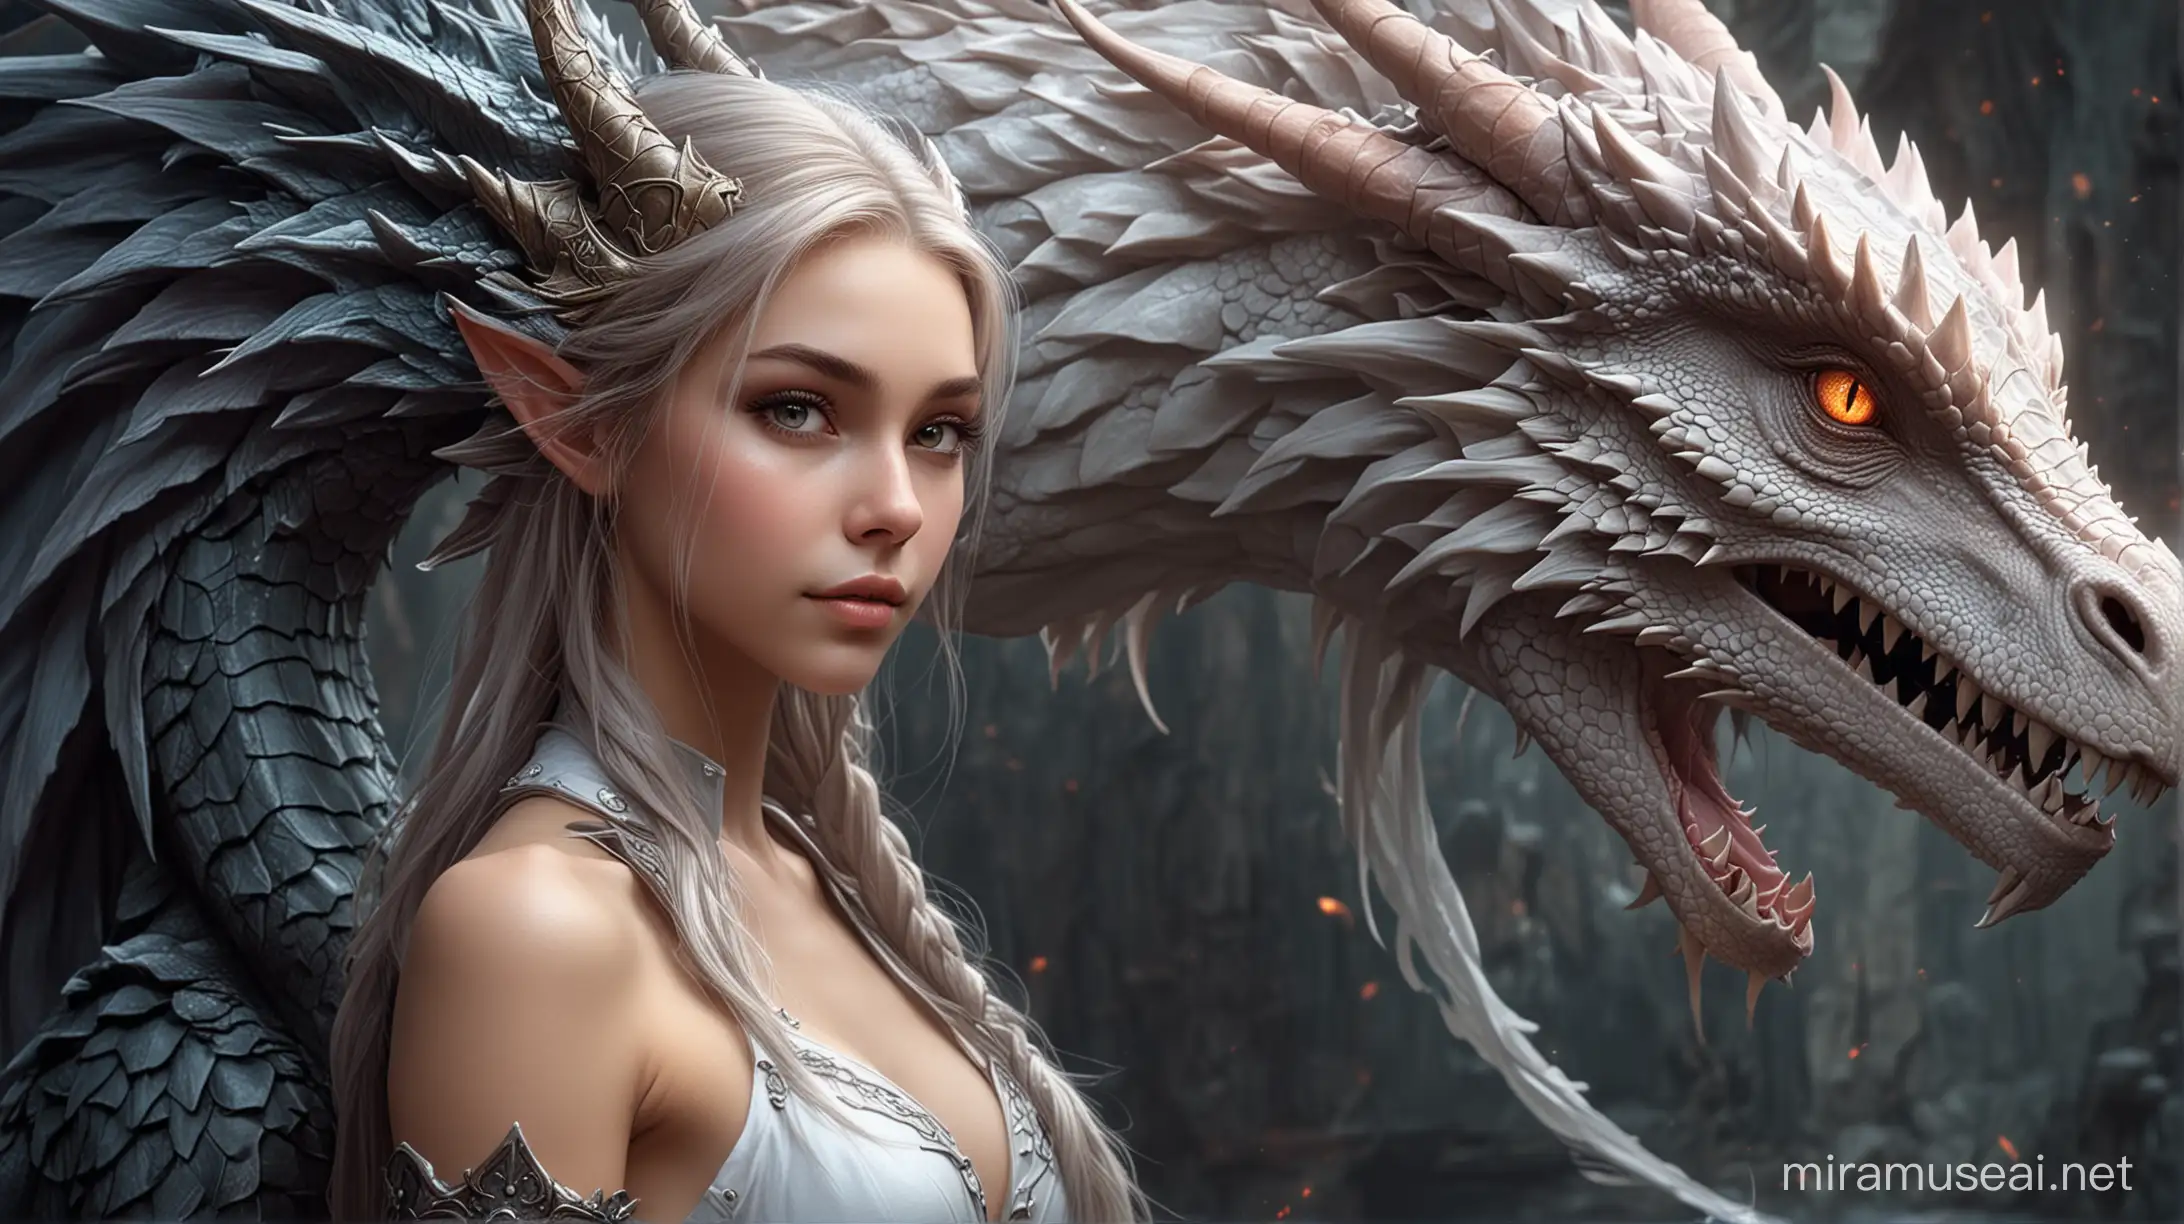 Fantasy Girl with Dragon Enchanting Illustration of a Mythical Companion